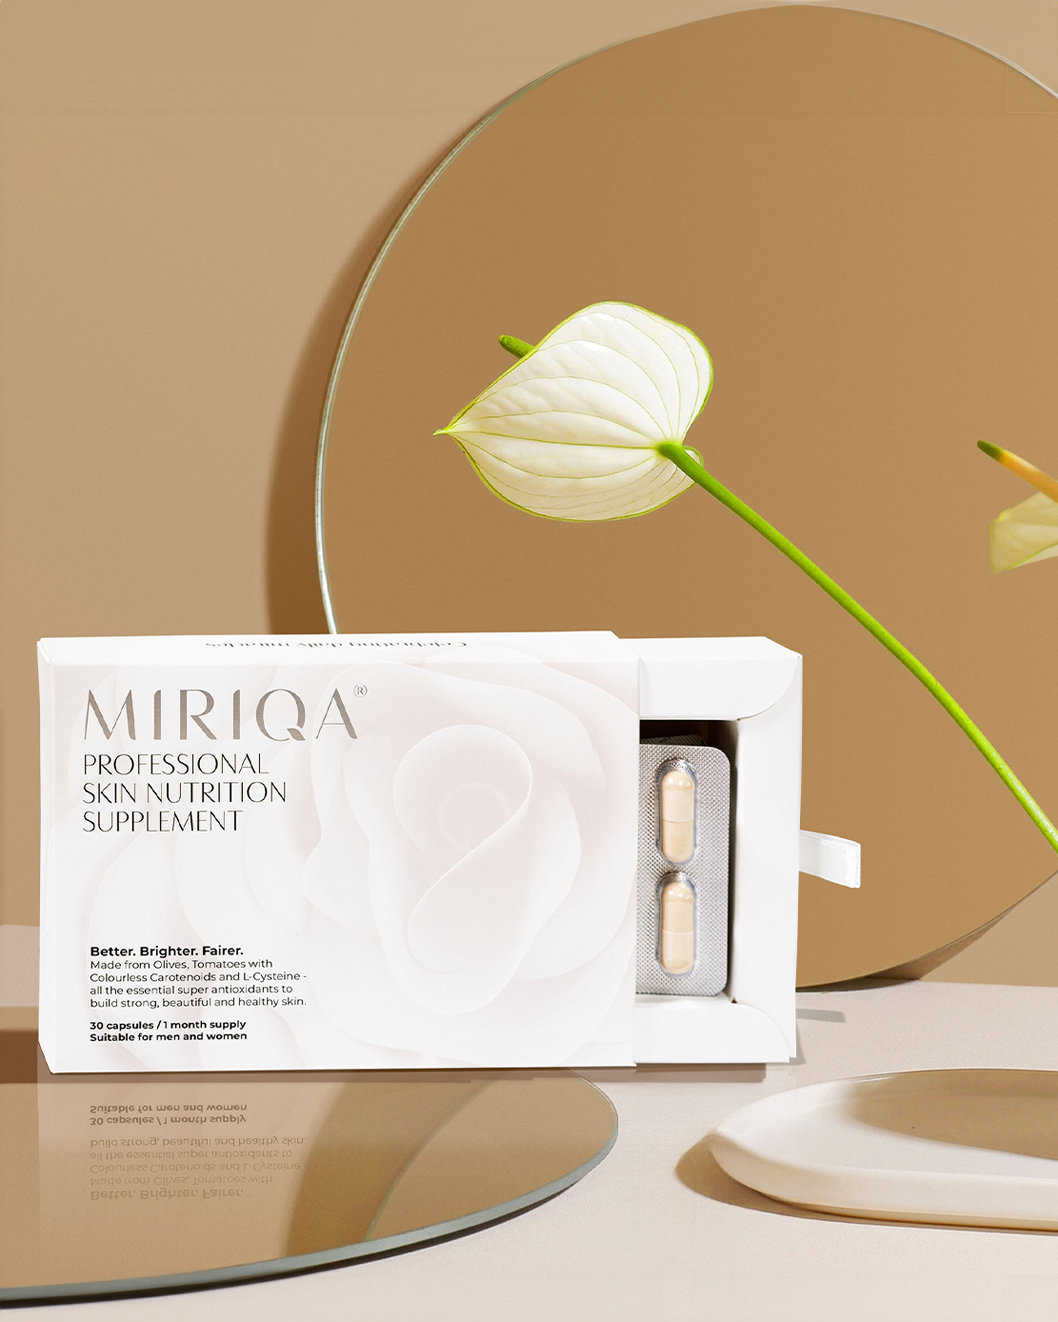 MIRIQA® Professional Skin Nutrition Supplement